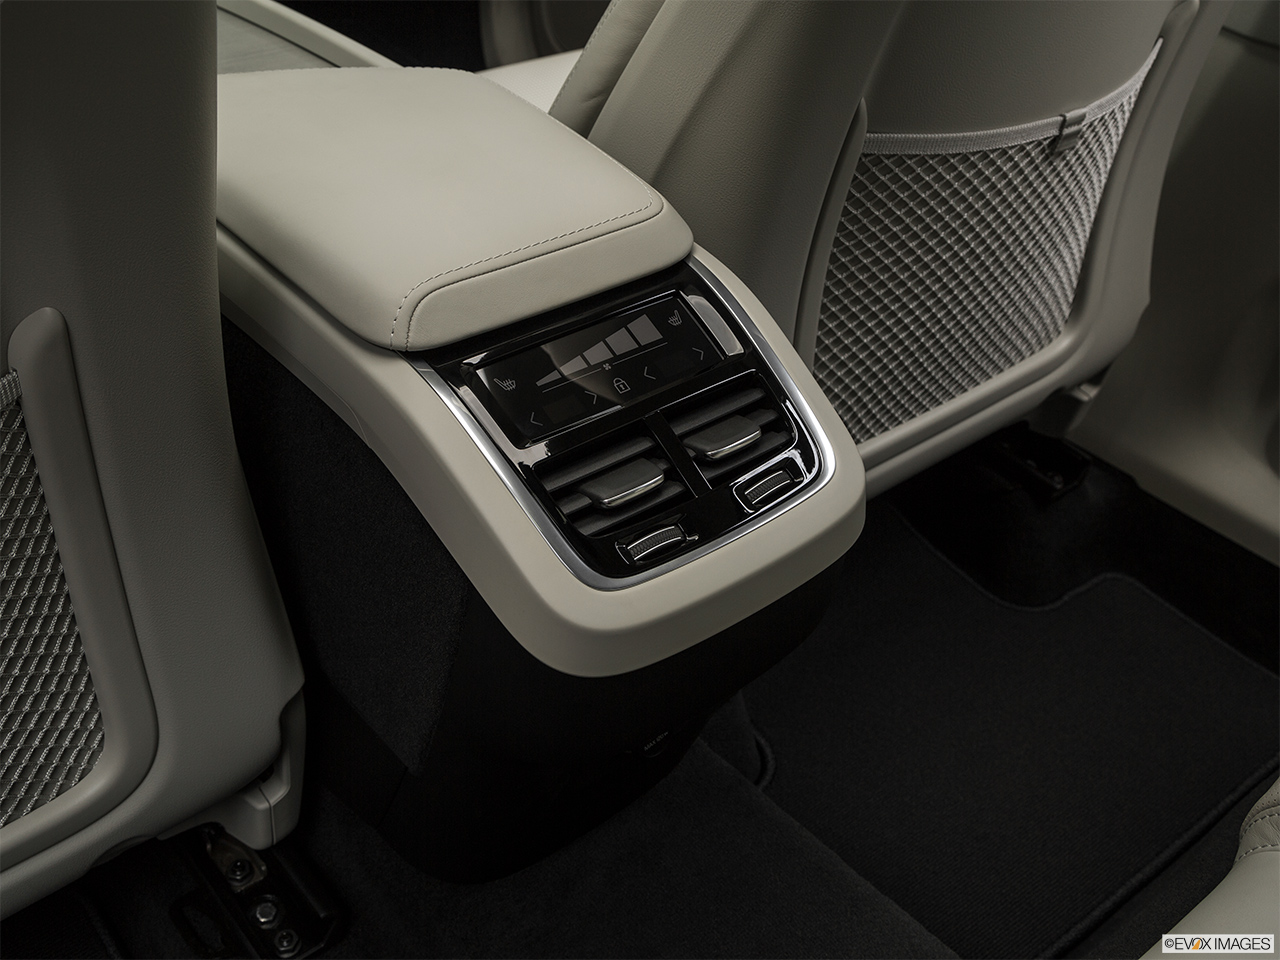 2019 Volvo XC60 T6 Inscription Rear A/C controls. 